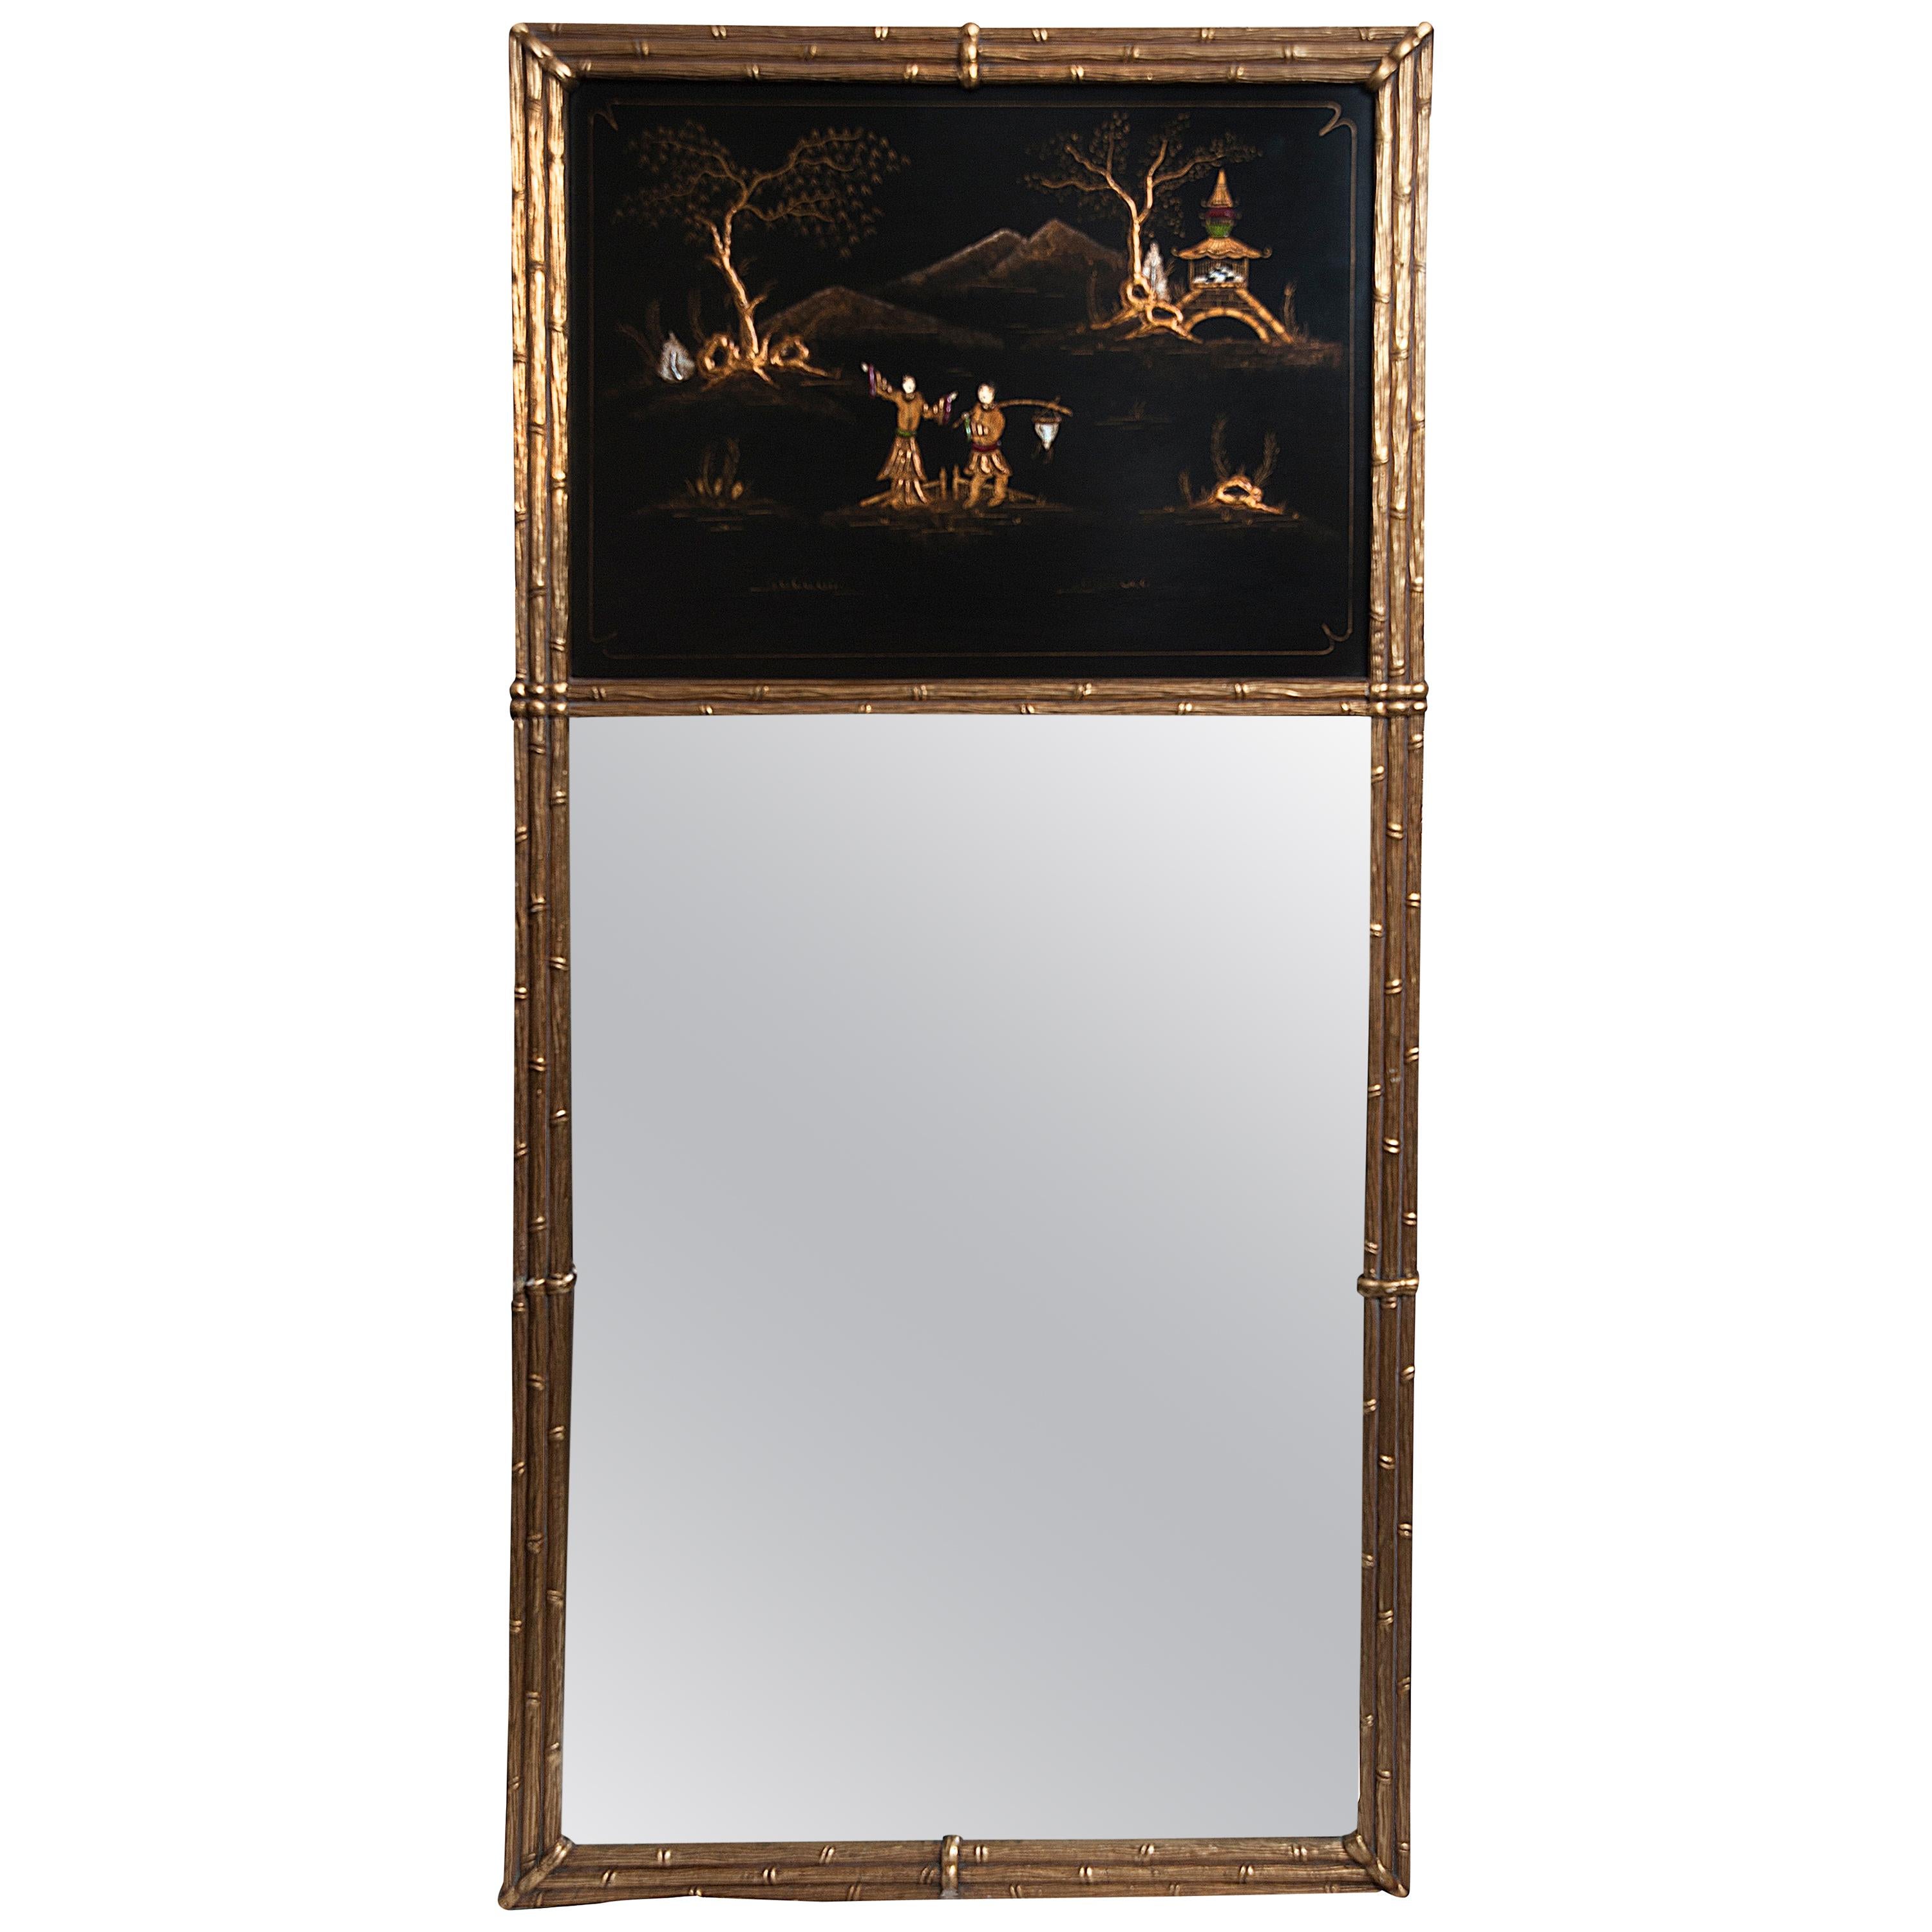 French Maison Jansen Chinoiserie Trumeau Mirror, Gilt Bamboo Border